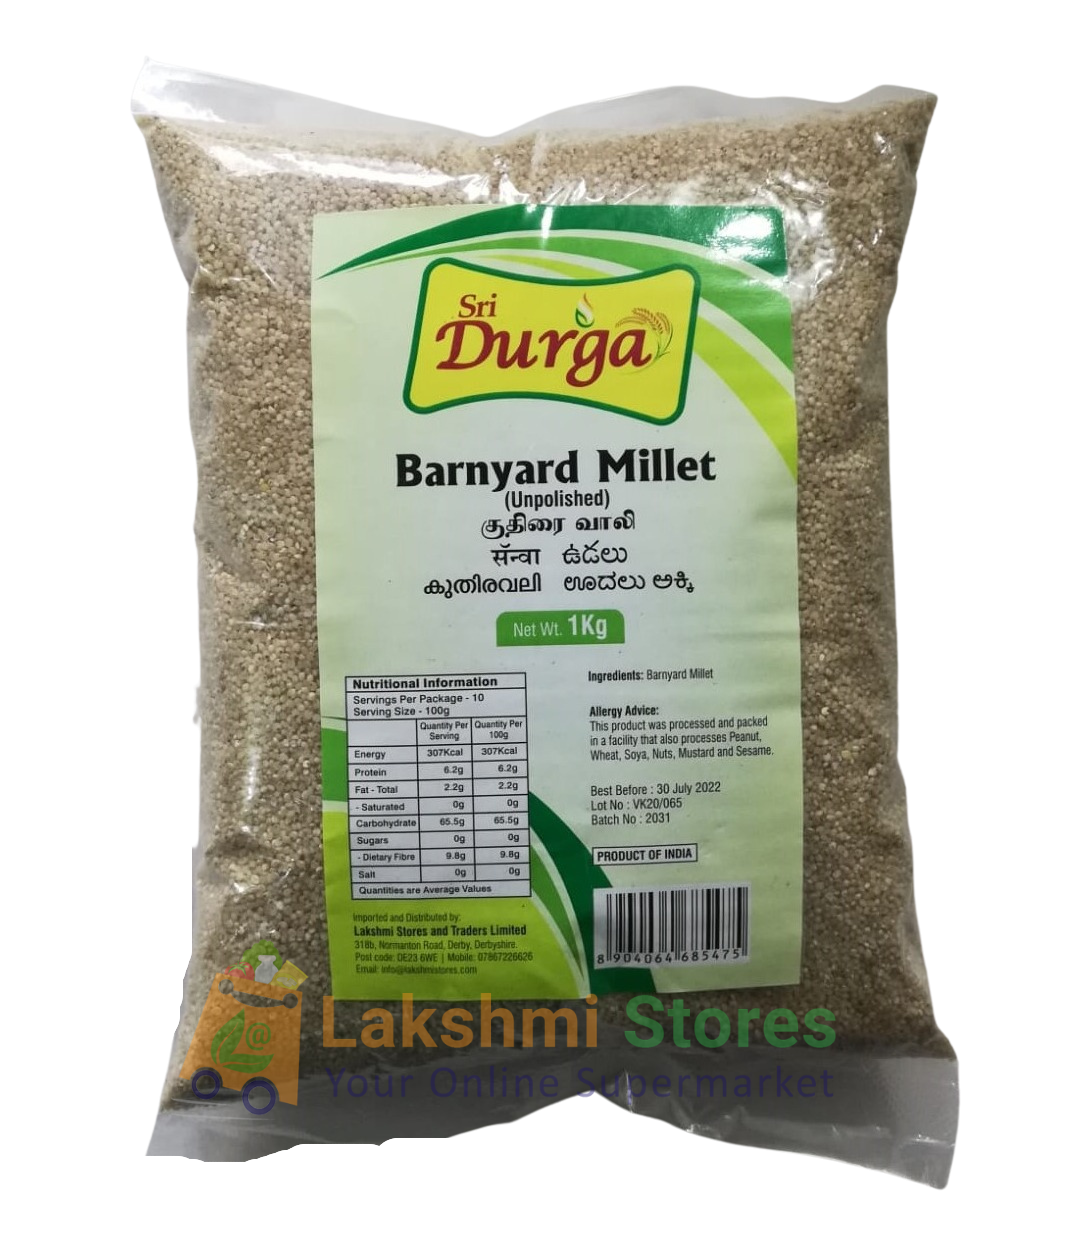 sri durga kuthiraivali rice (barnyard millet) 1kg - unpolished